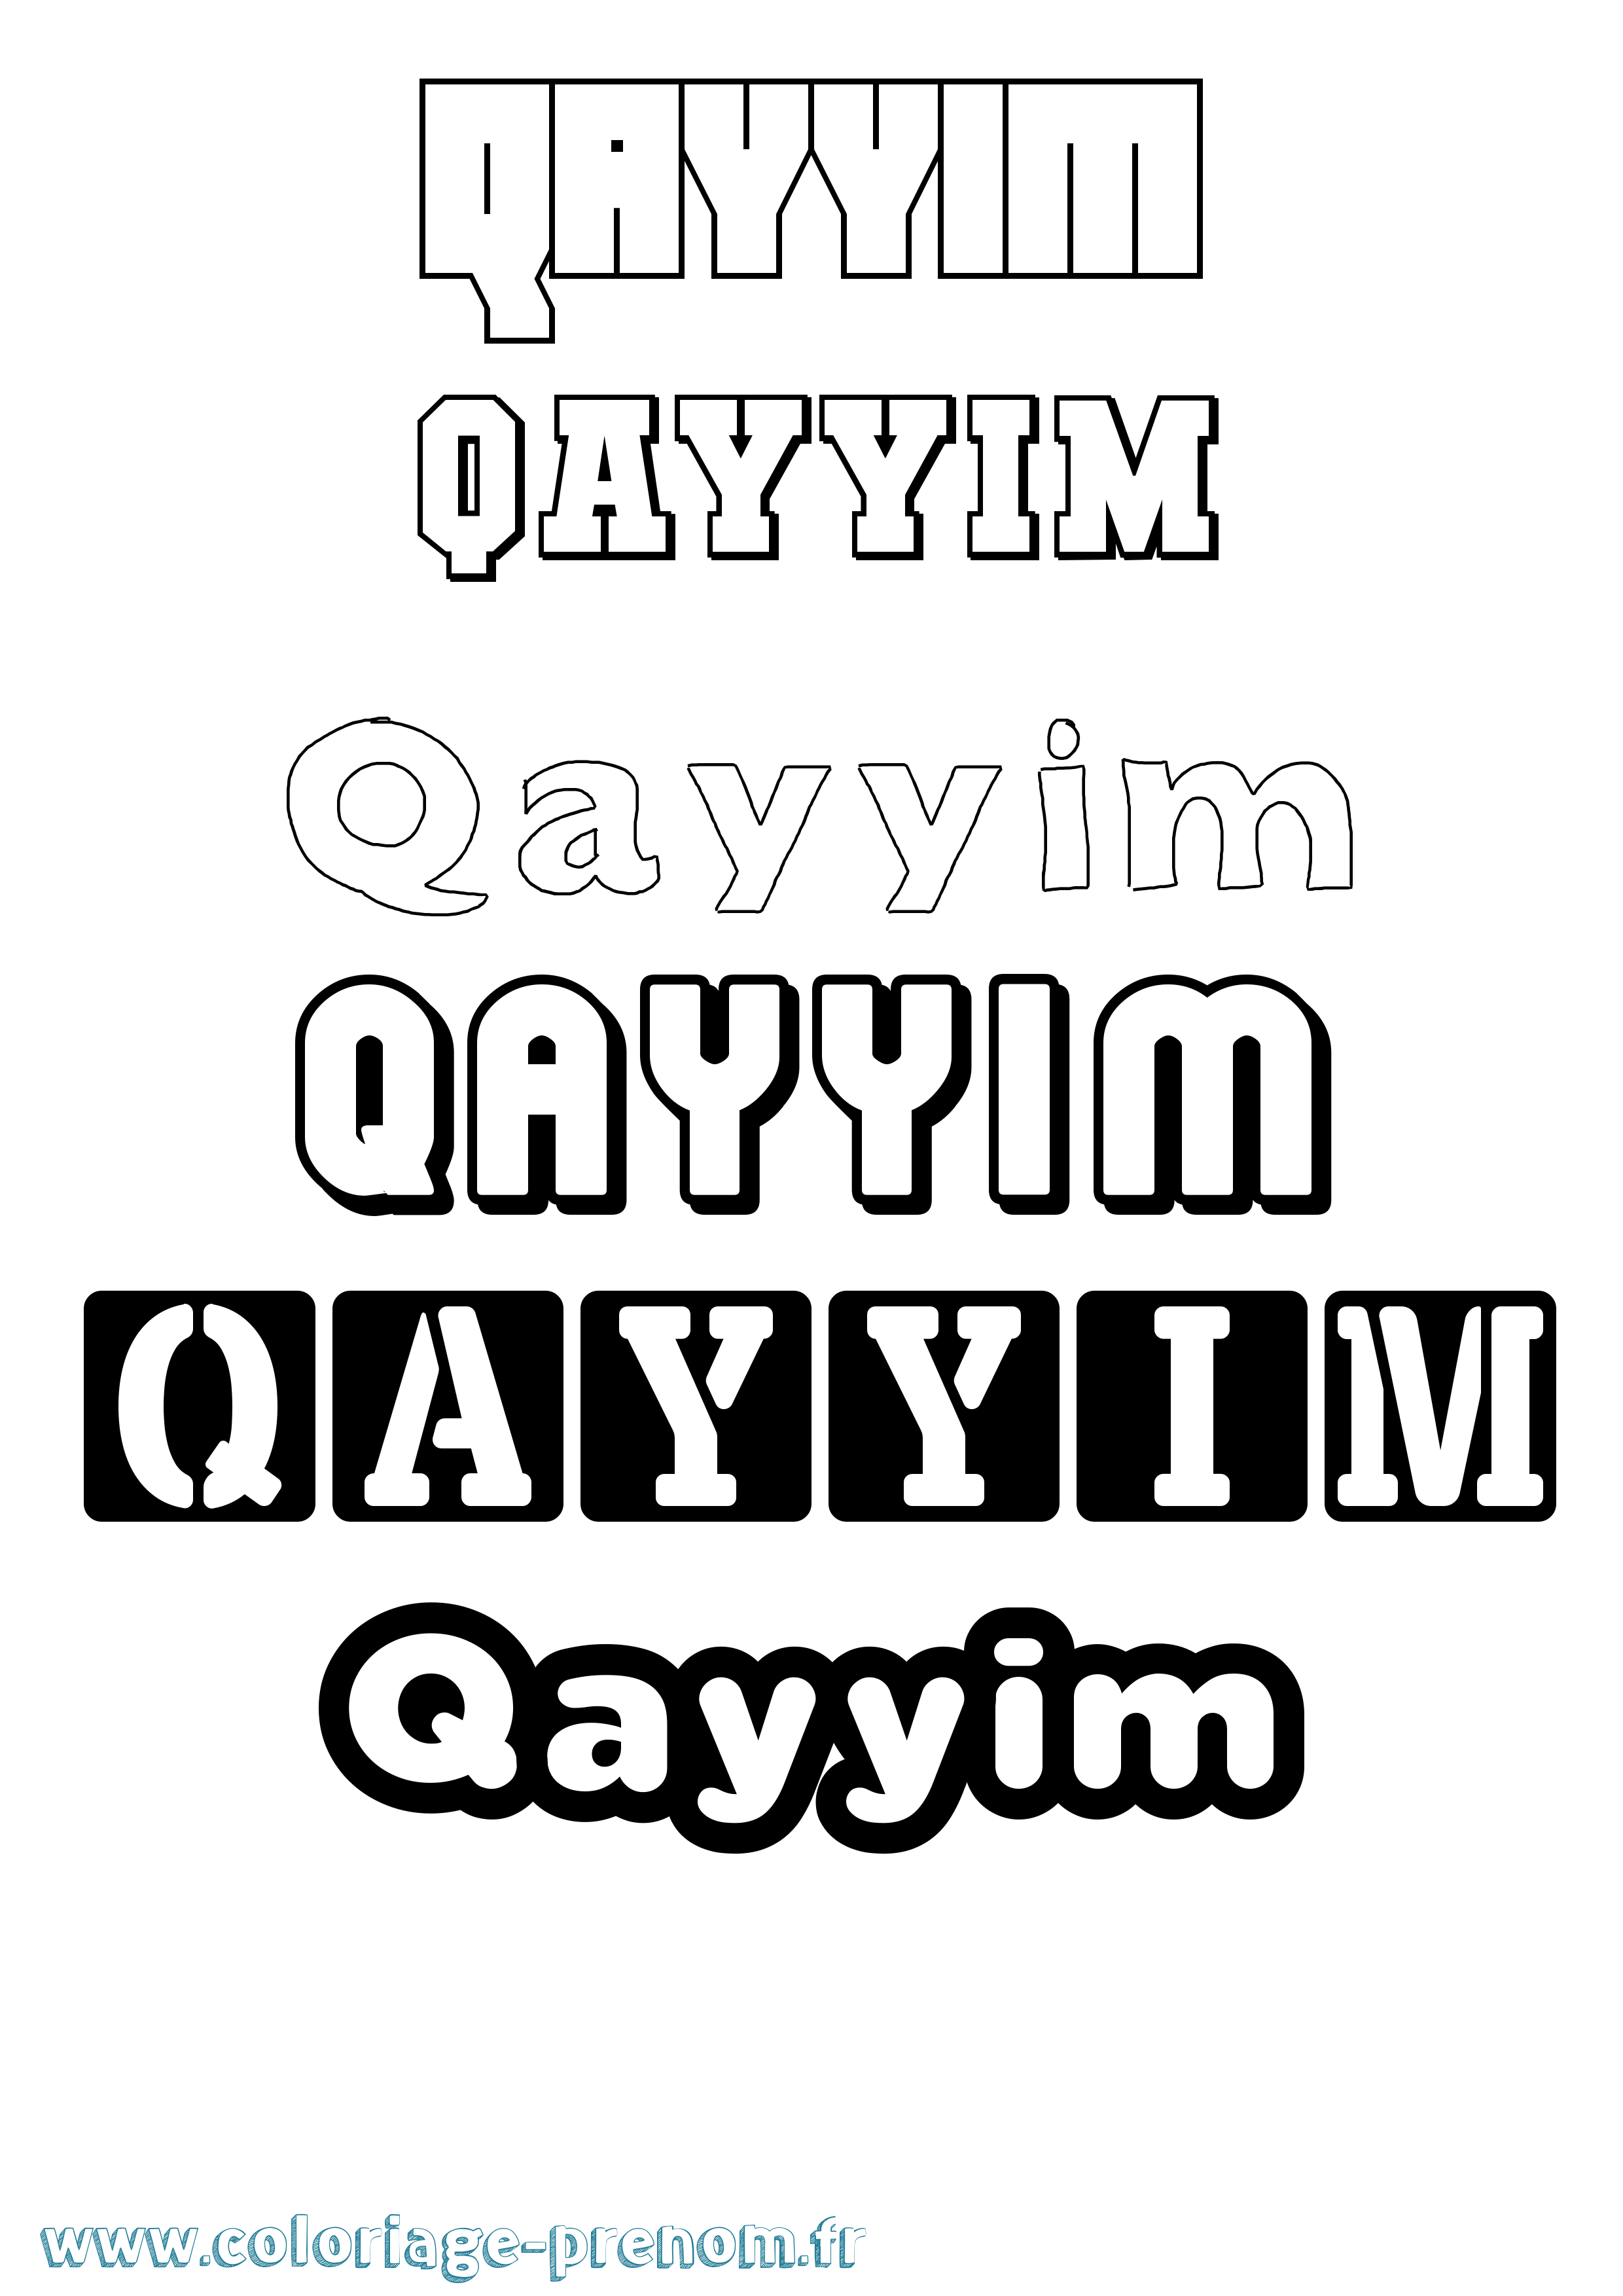 Coloriage prénom Qayyim Simple